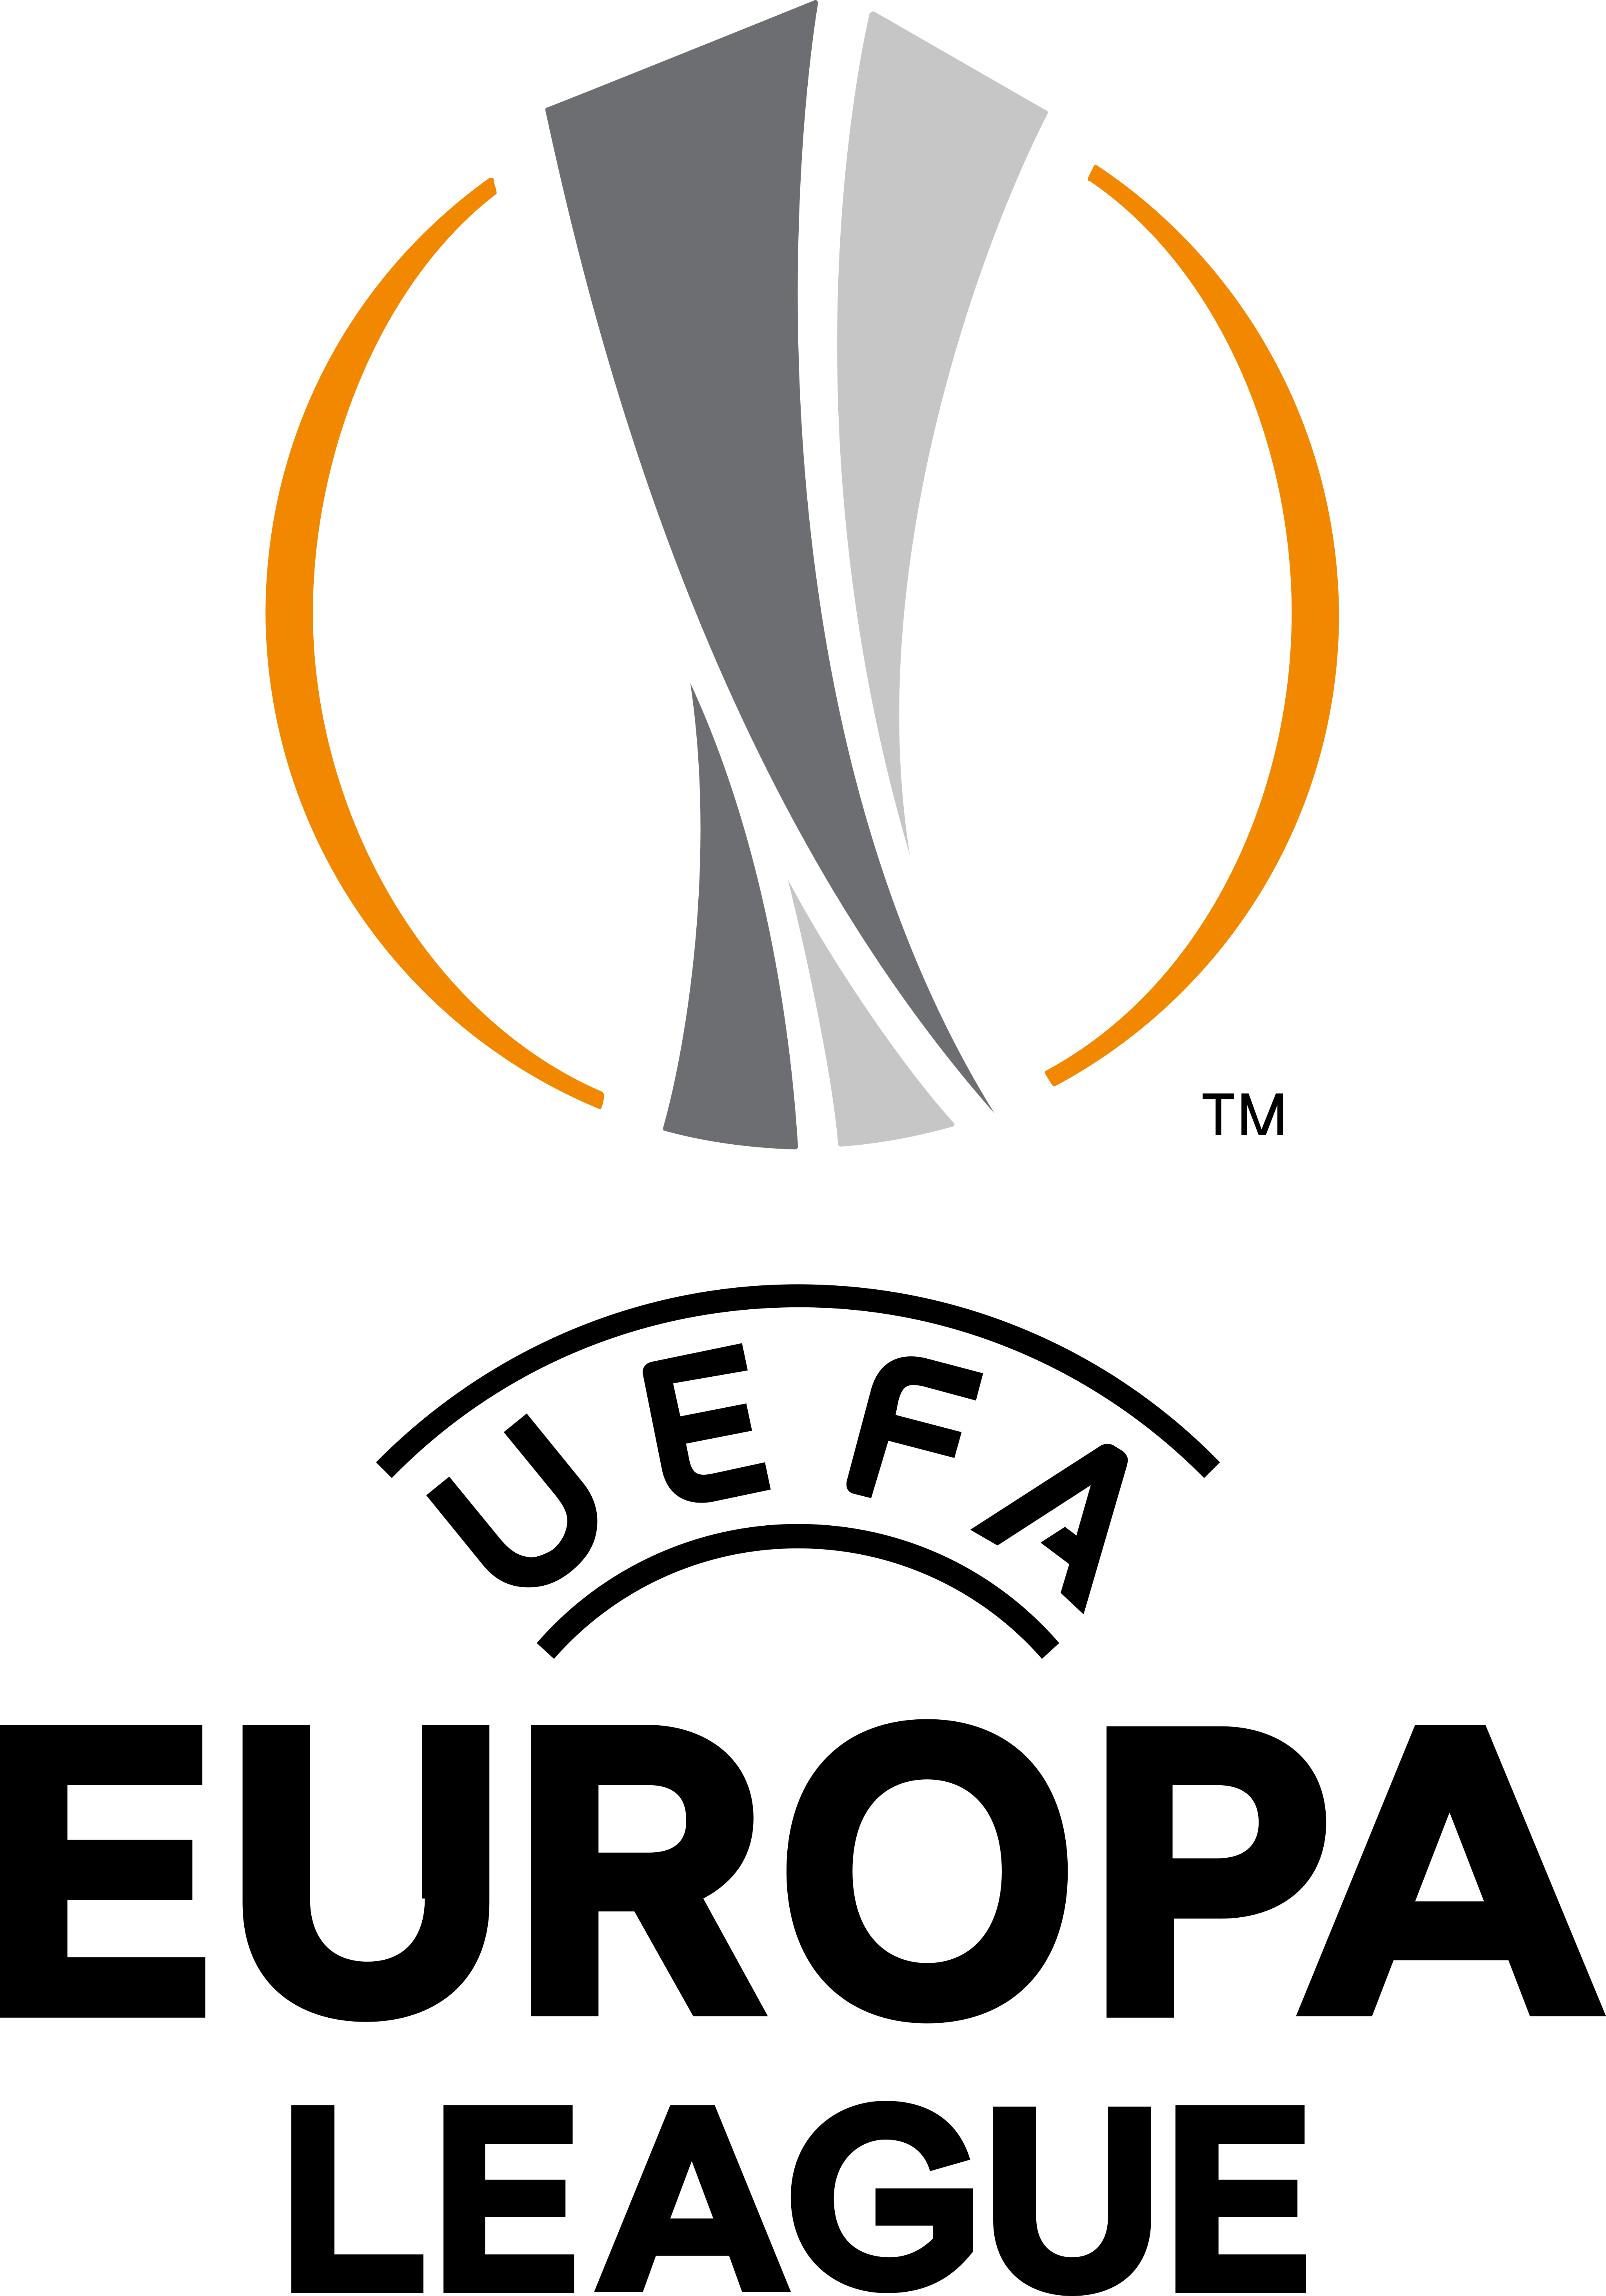 UEFA Europa League Logo.